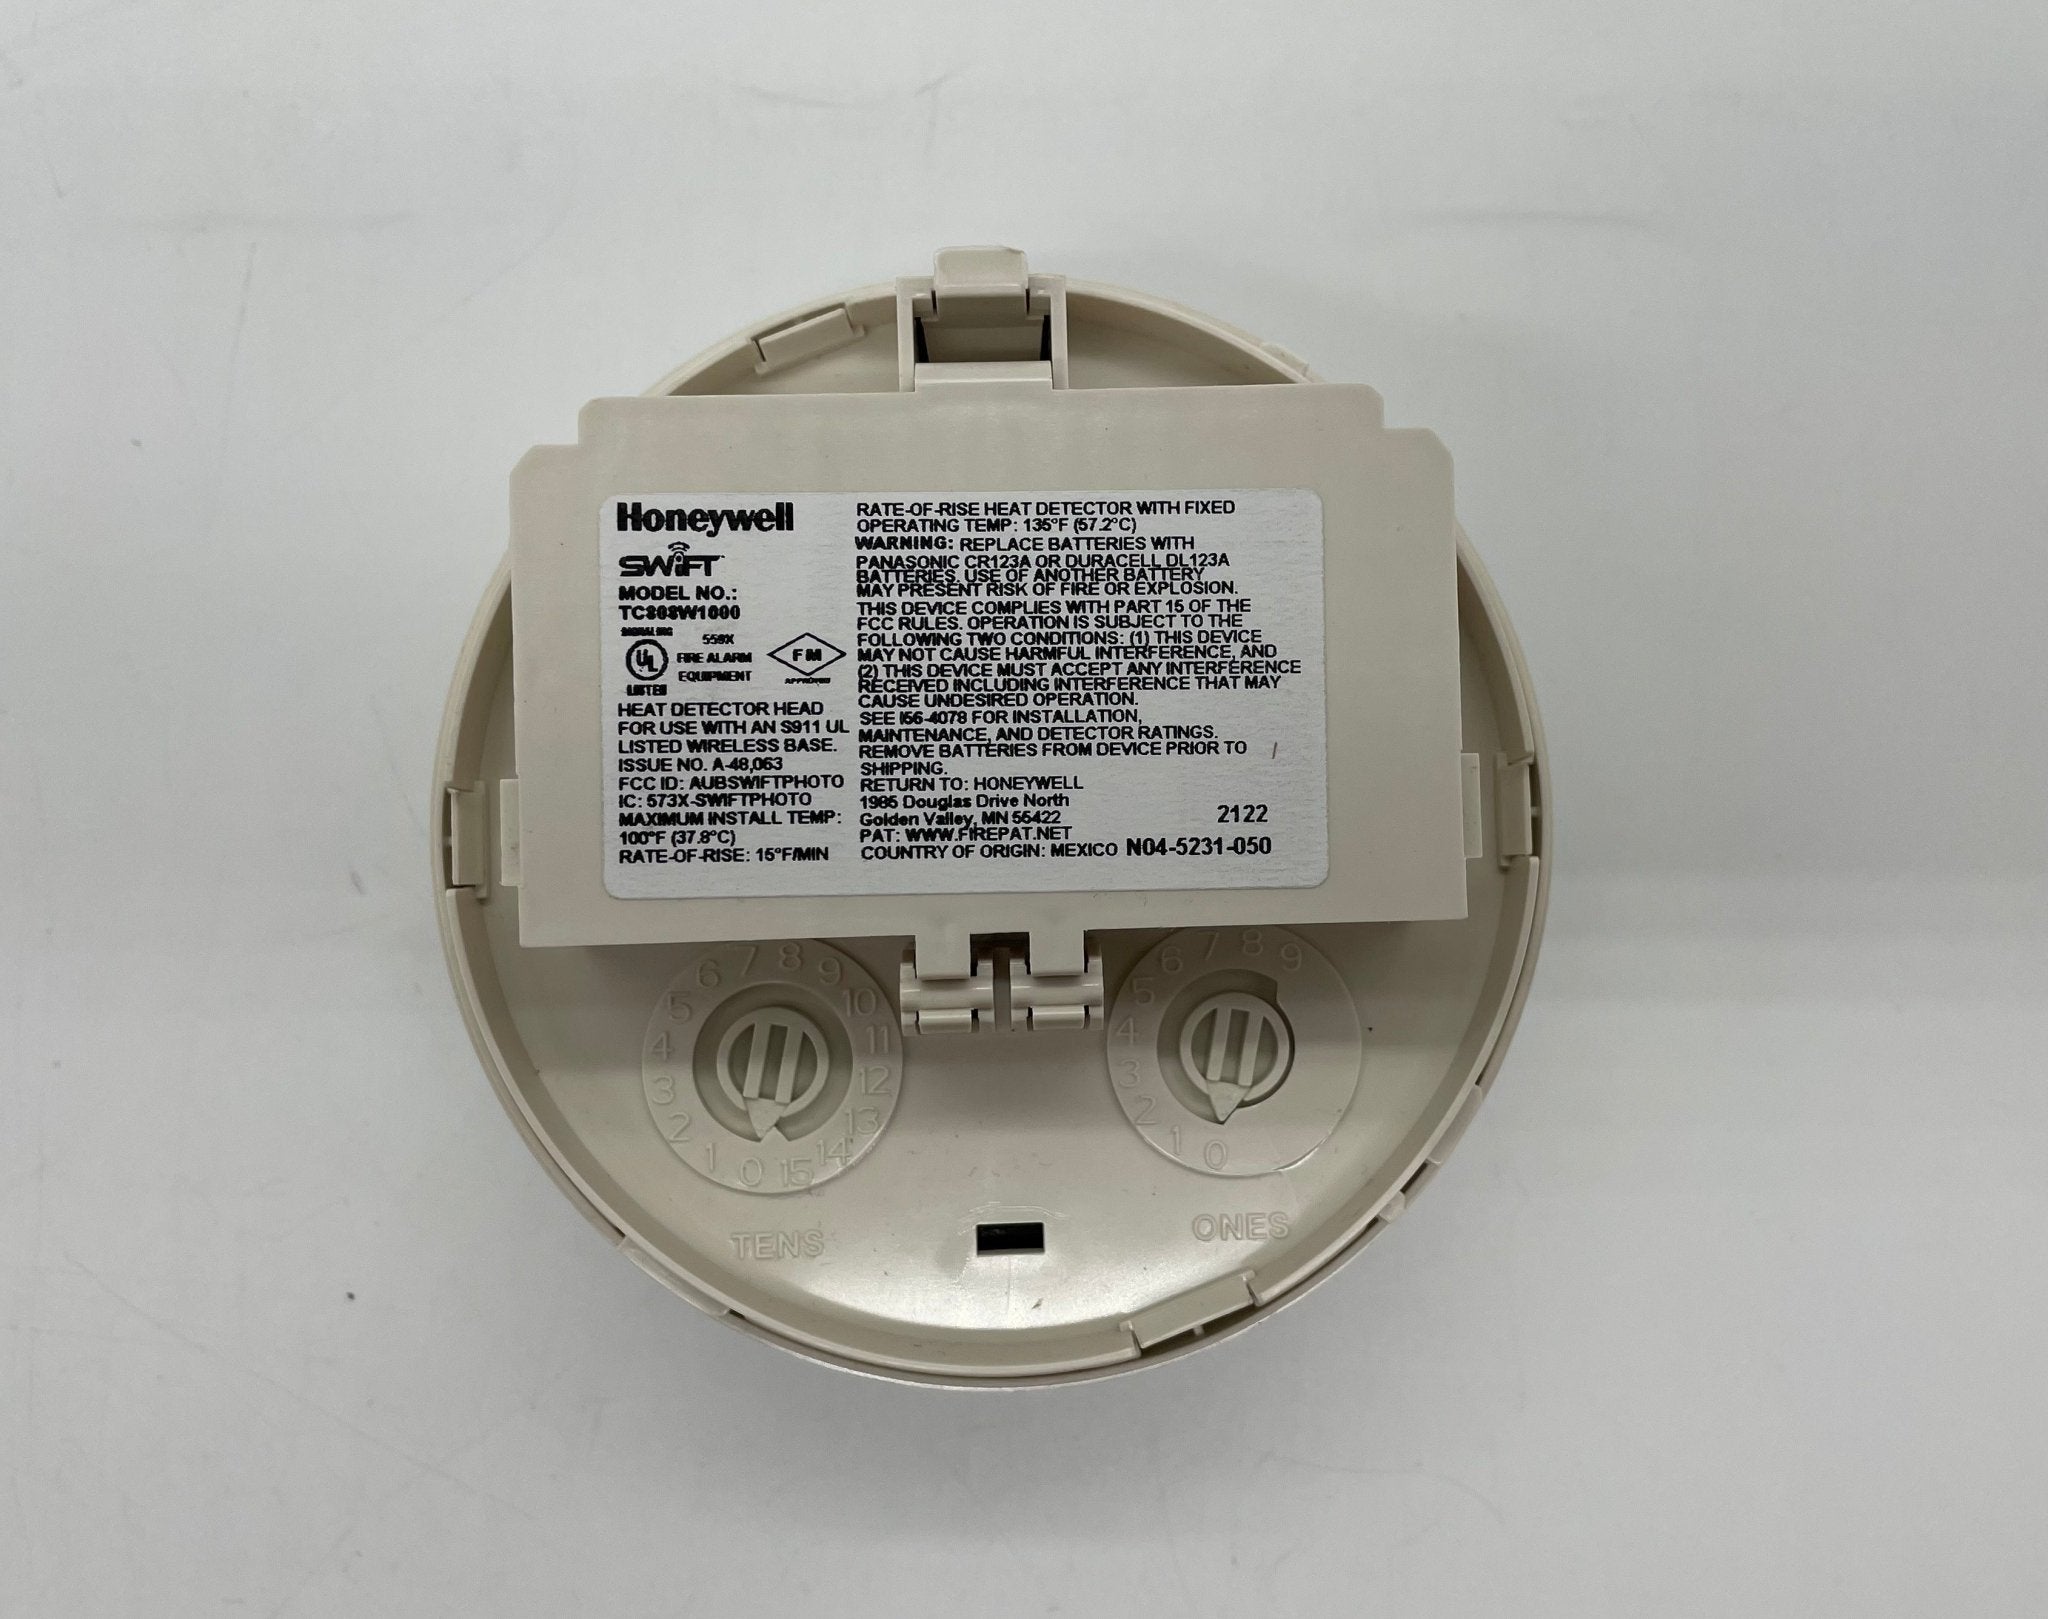 Honeywell TC808W1000 - The Fire Alarm Supplier